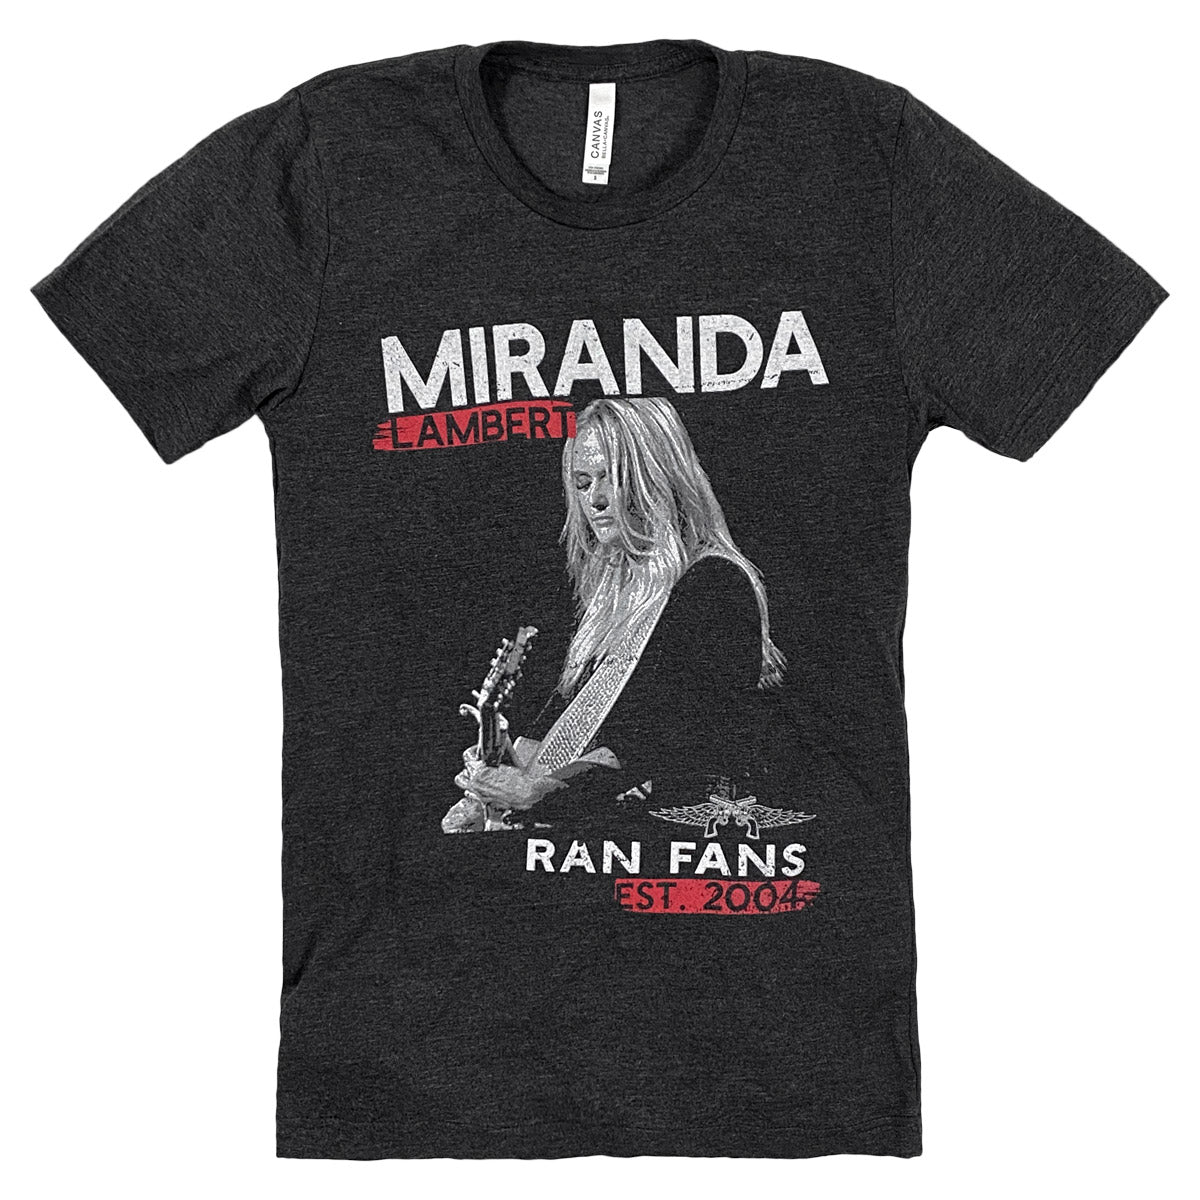 "Miranda Lambert, Ran Fans, Est. 2004" with image of Miranda on front